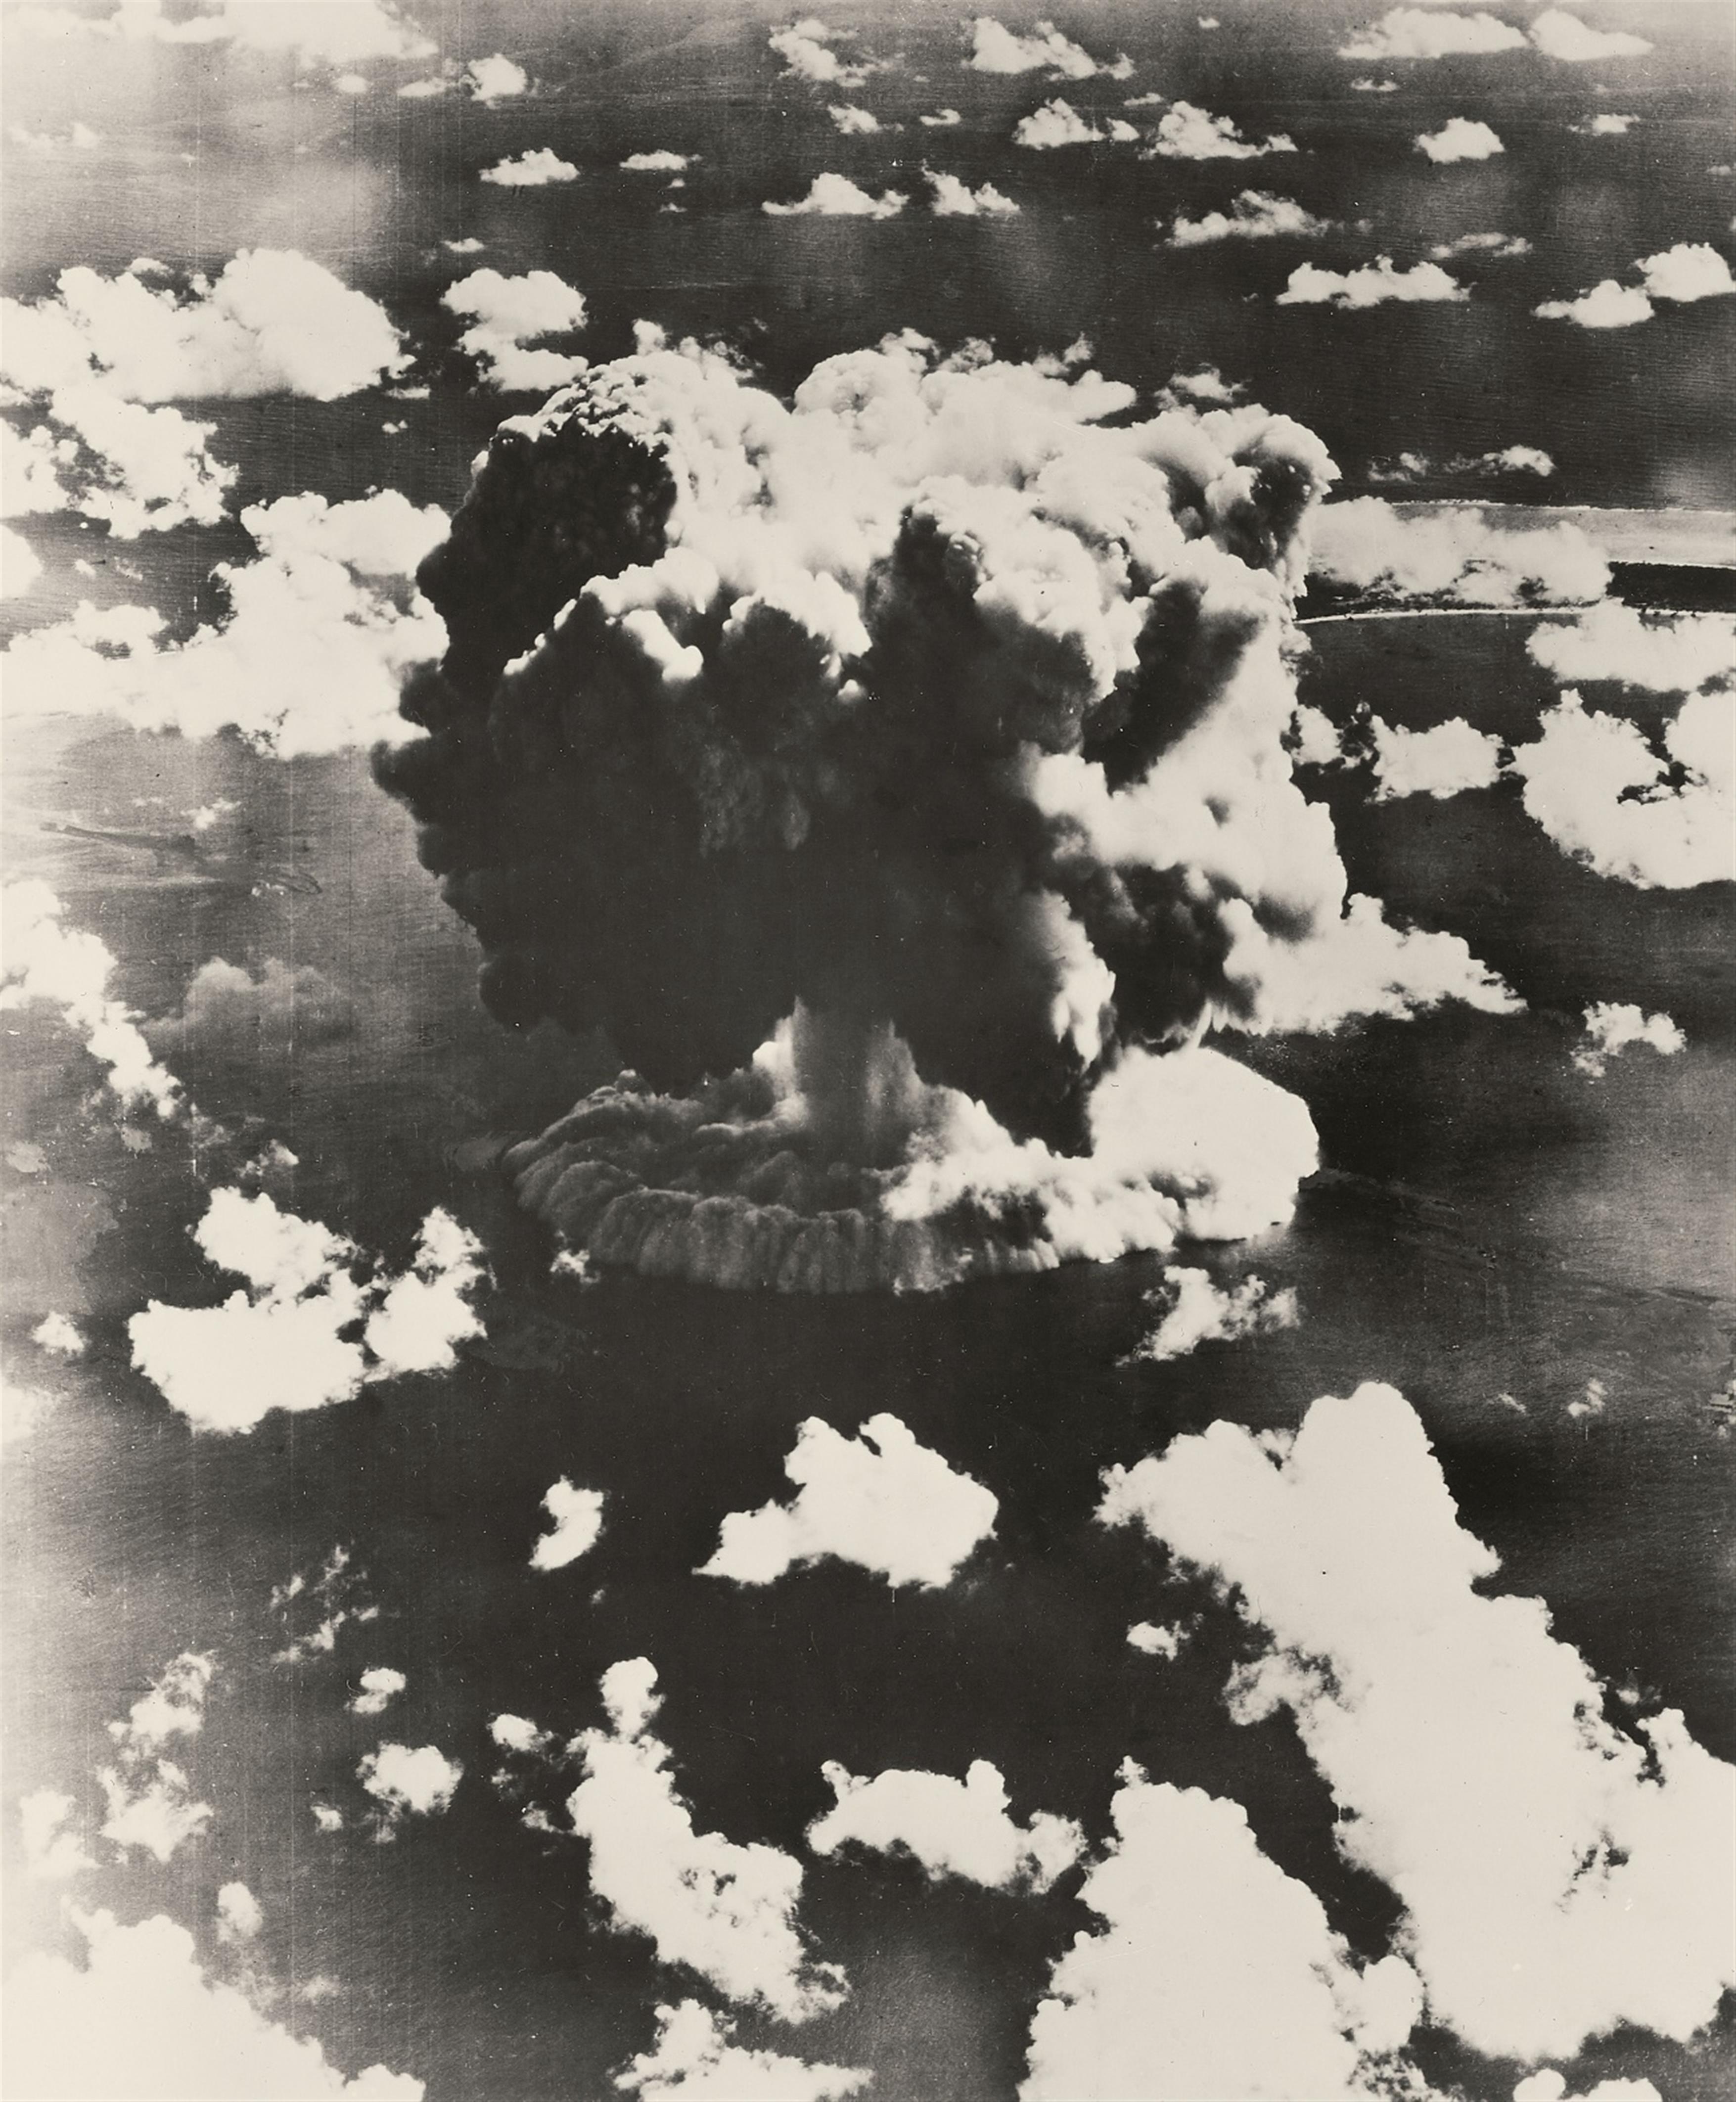 Joint Army Task Force One Photo - "Operation Crossroads" - Aufnahmen der Atombomben-Tests auf dem Bikini-Atoll - image-13